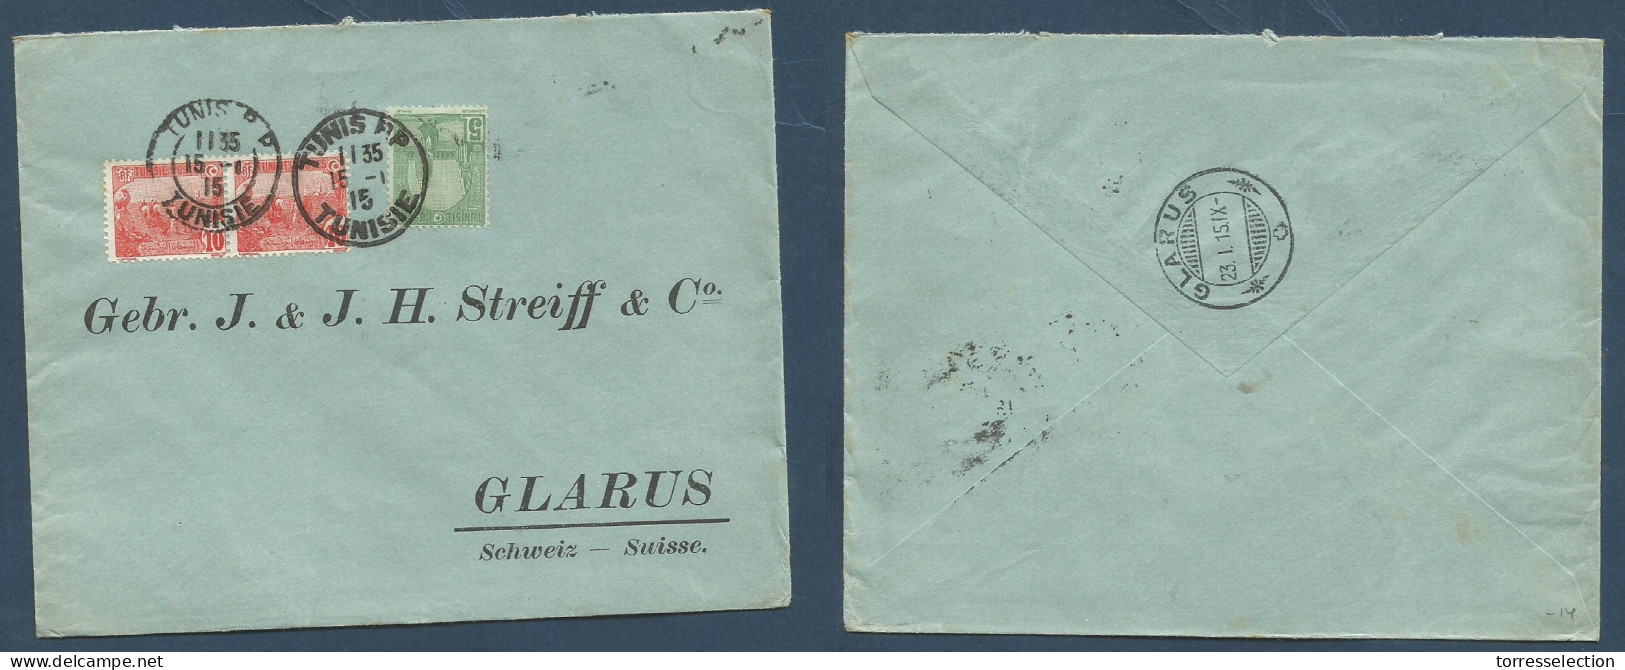 TUNISIA. 1915 (15 Jan) GPO - Glarus, Switzerland (23 Jan) Multifkd Colorful Envelope. Nice Item. XSALE. - Tunisia (1956-...)